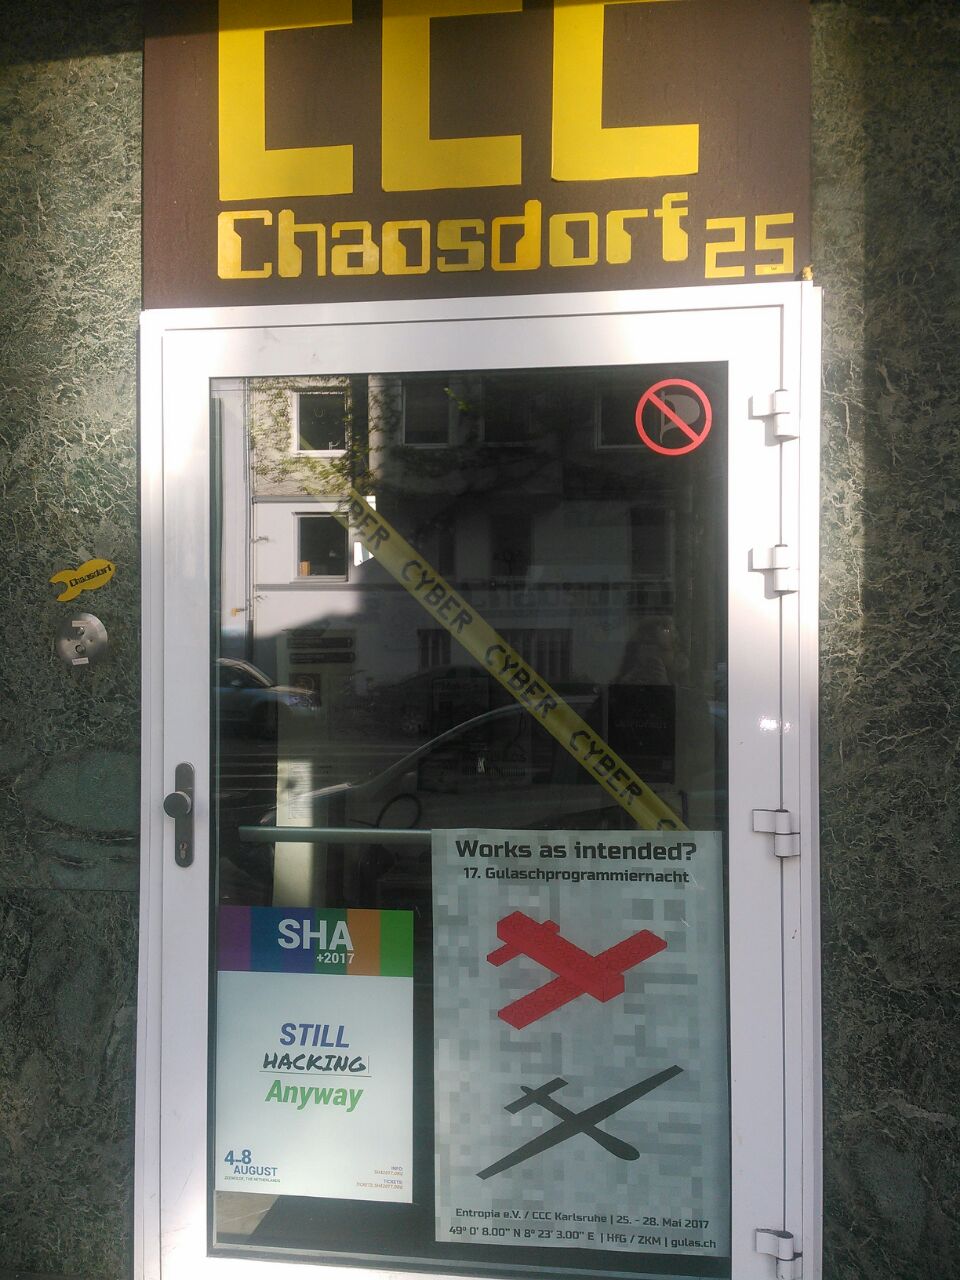 chaosdorf entrance